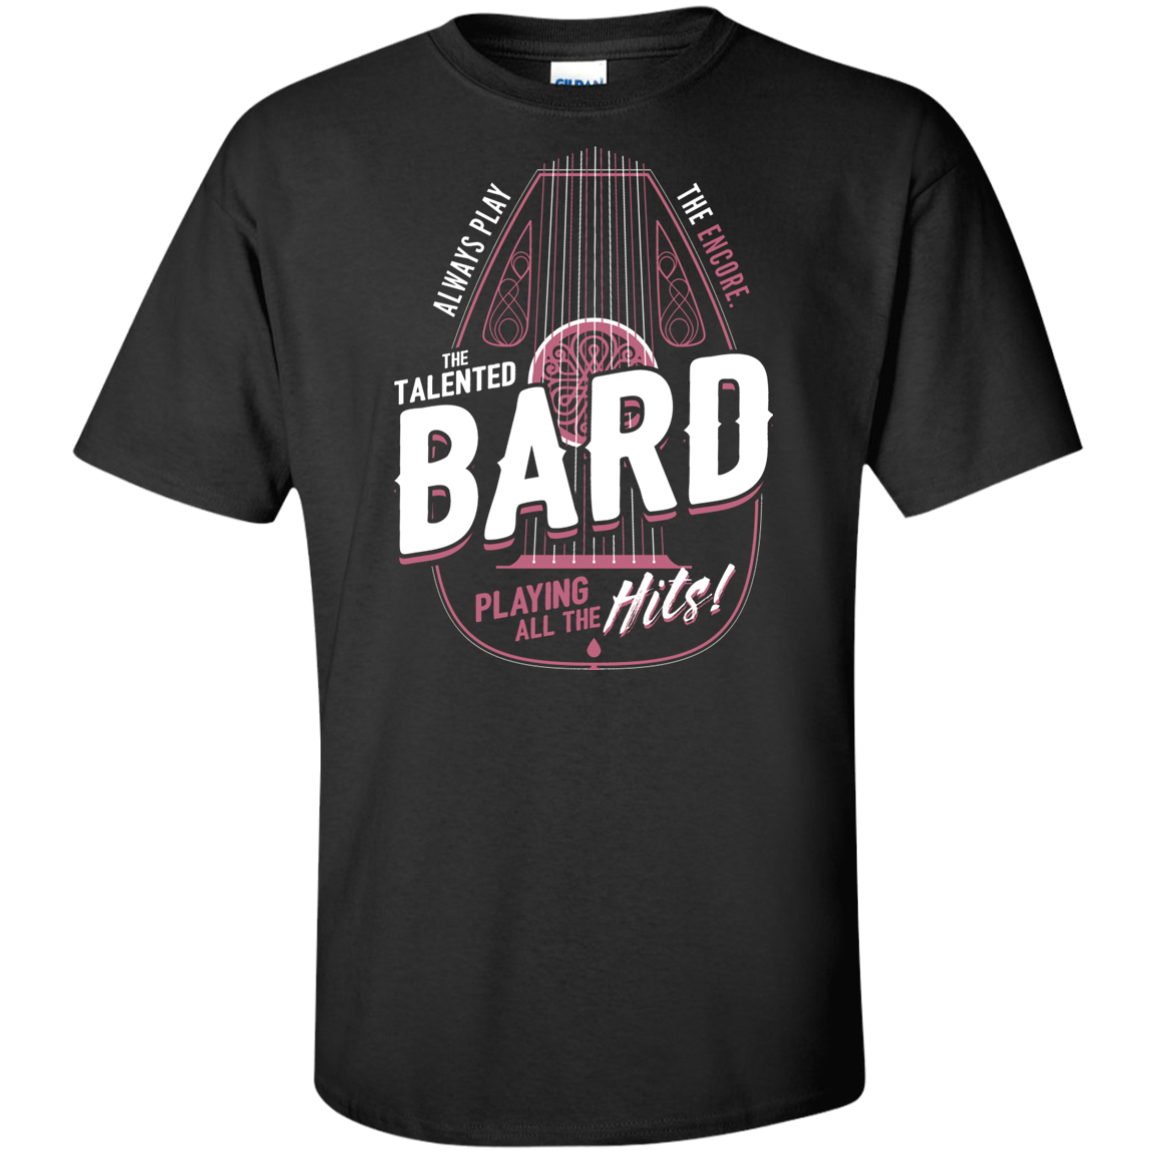 Bard Tall T-Shirt